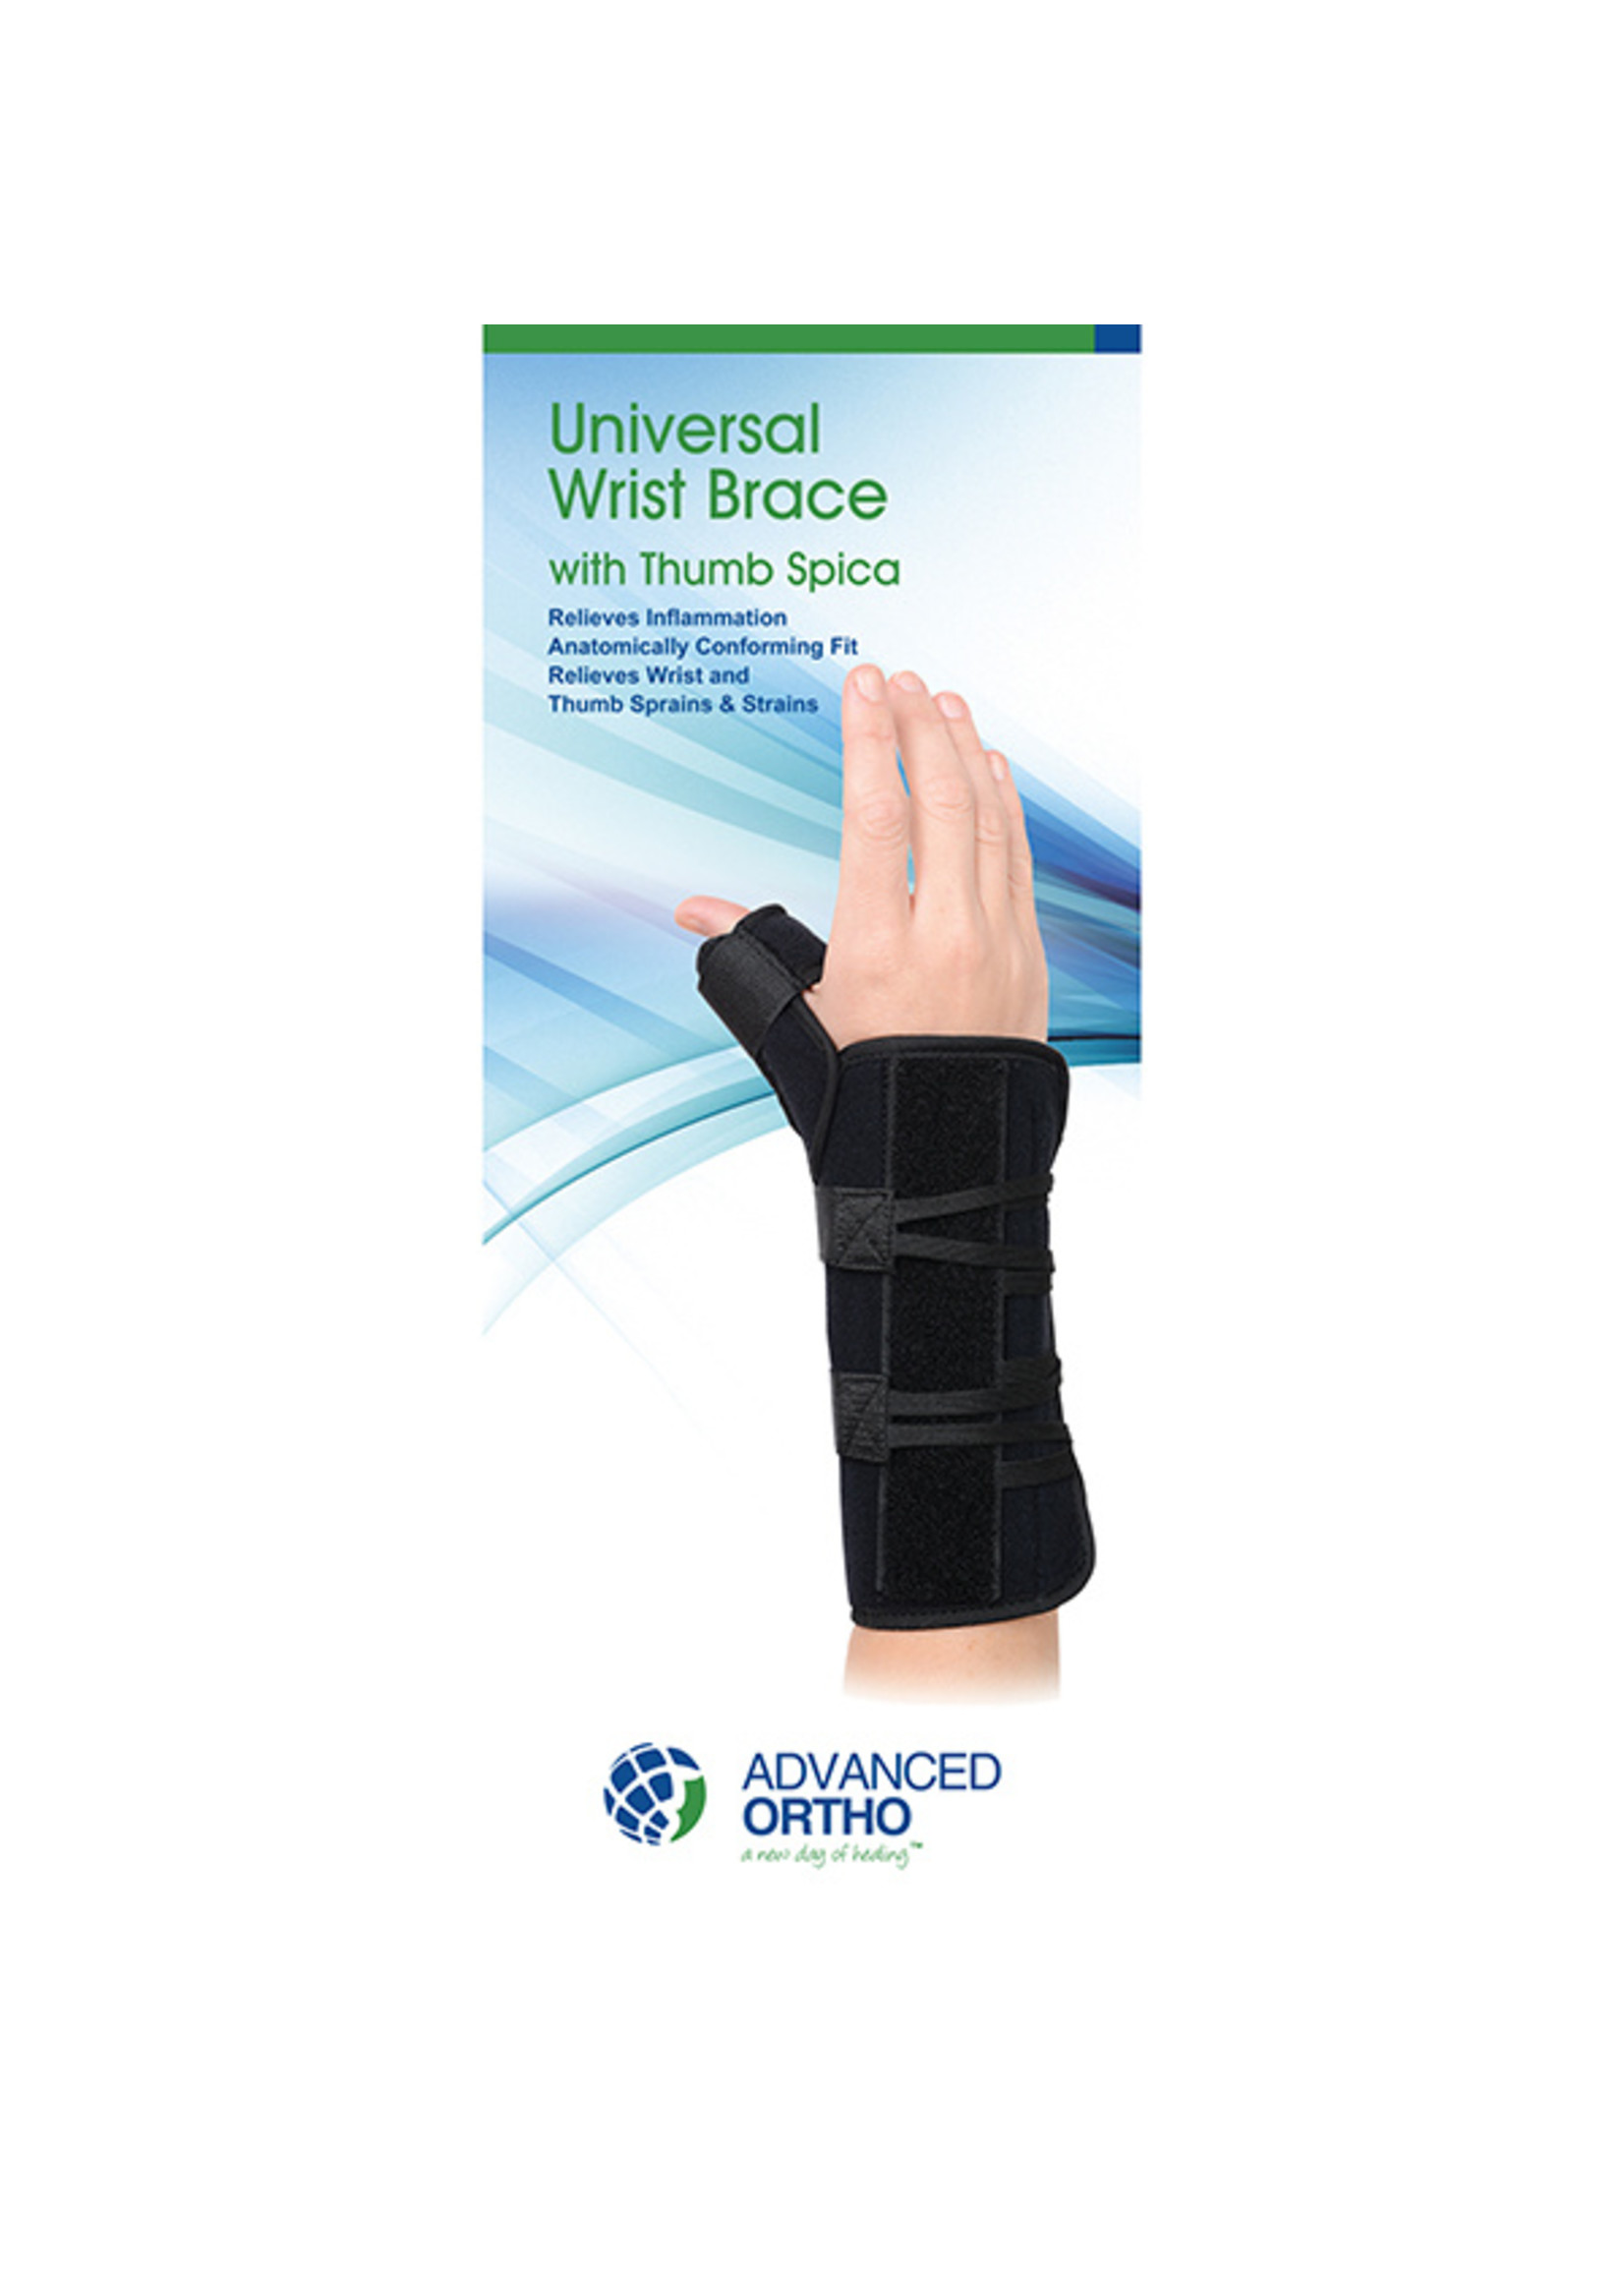 Universal Wrist Brace With Thumb Spica (Left Hand) - Hcpc: L3807 / L3809